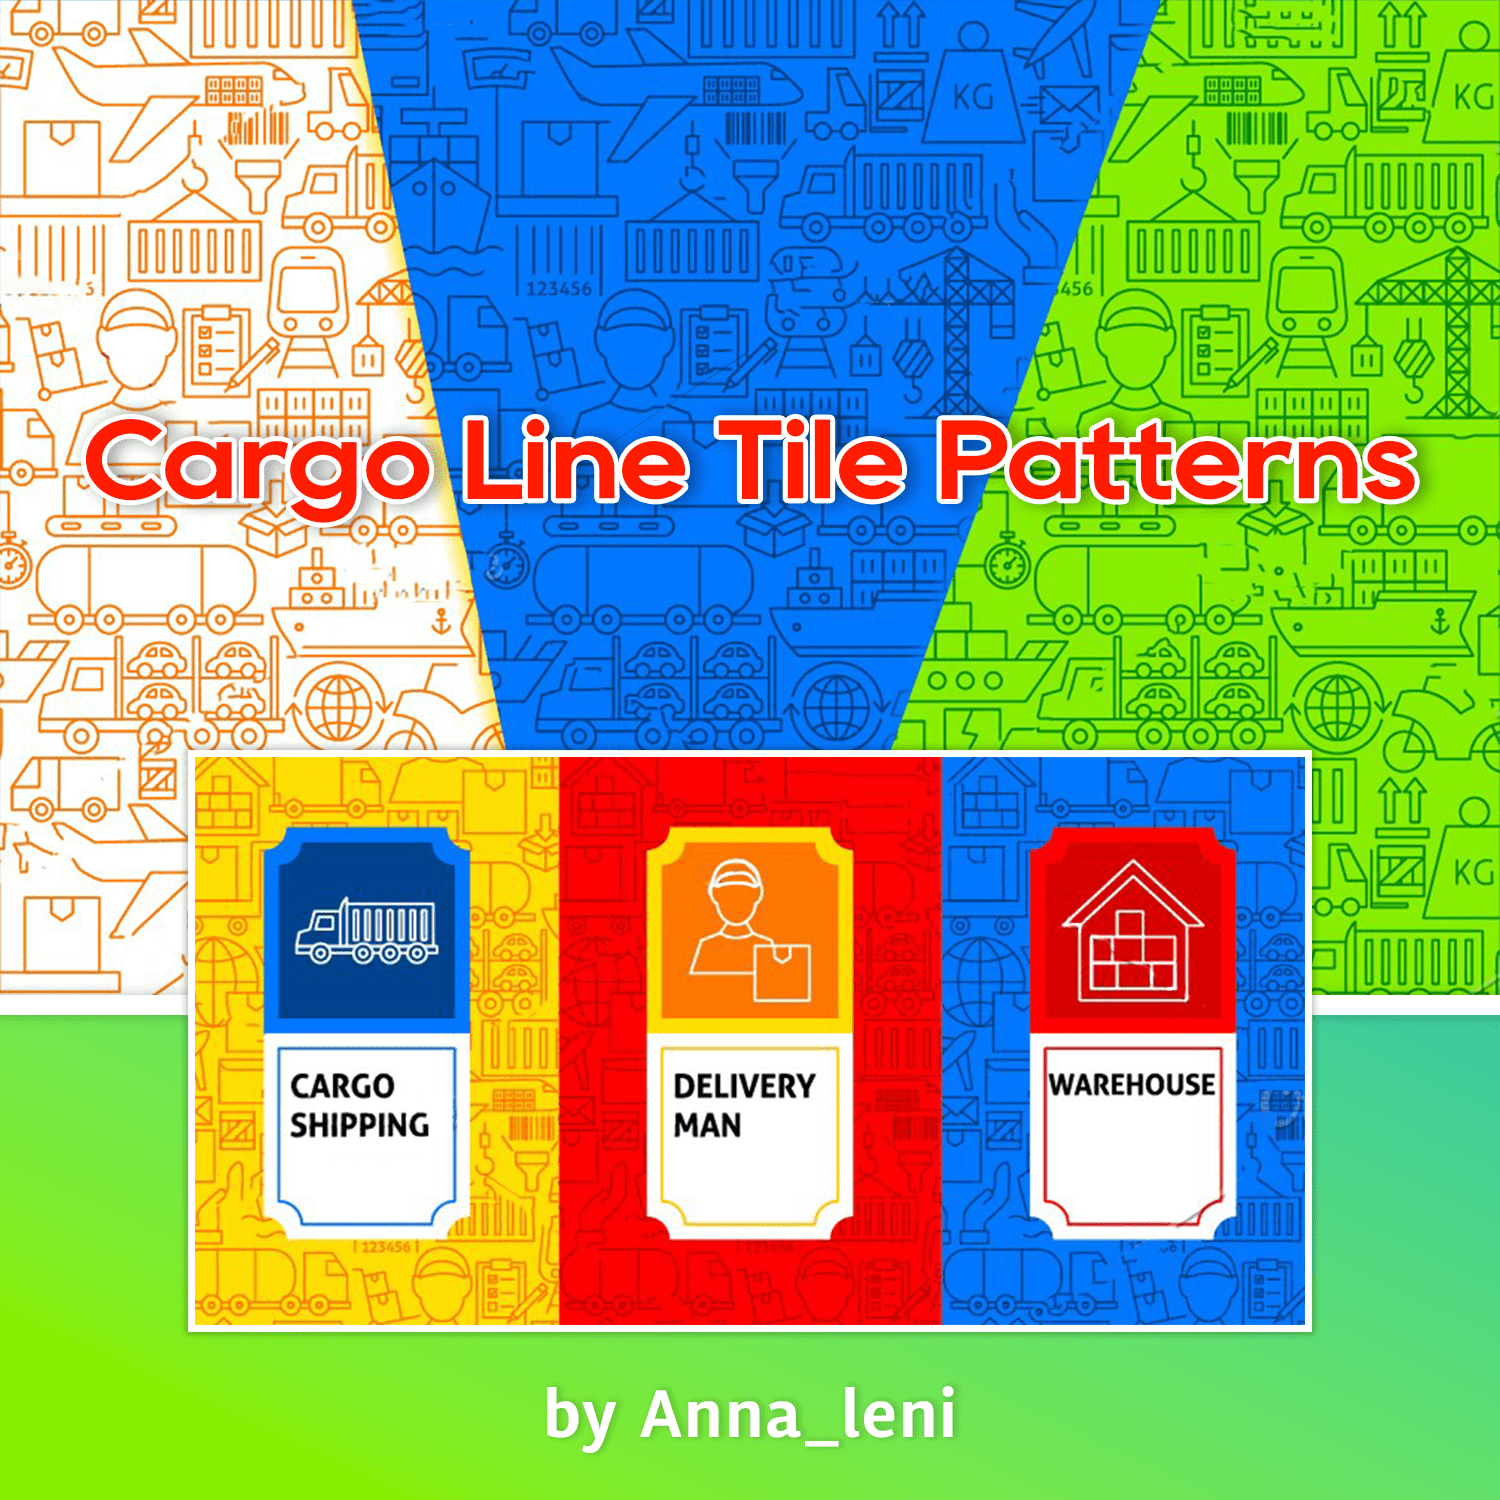 Cargo Line Tile Patterns cover.